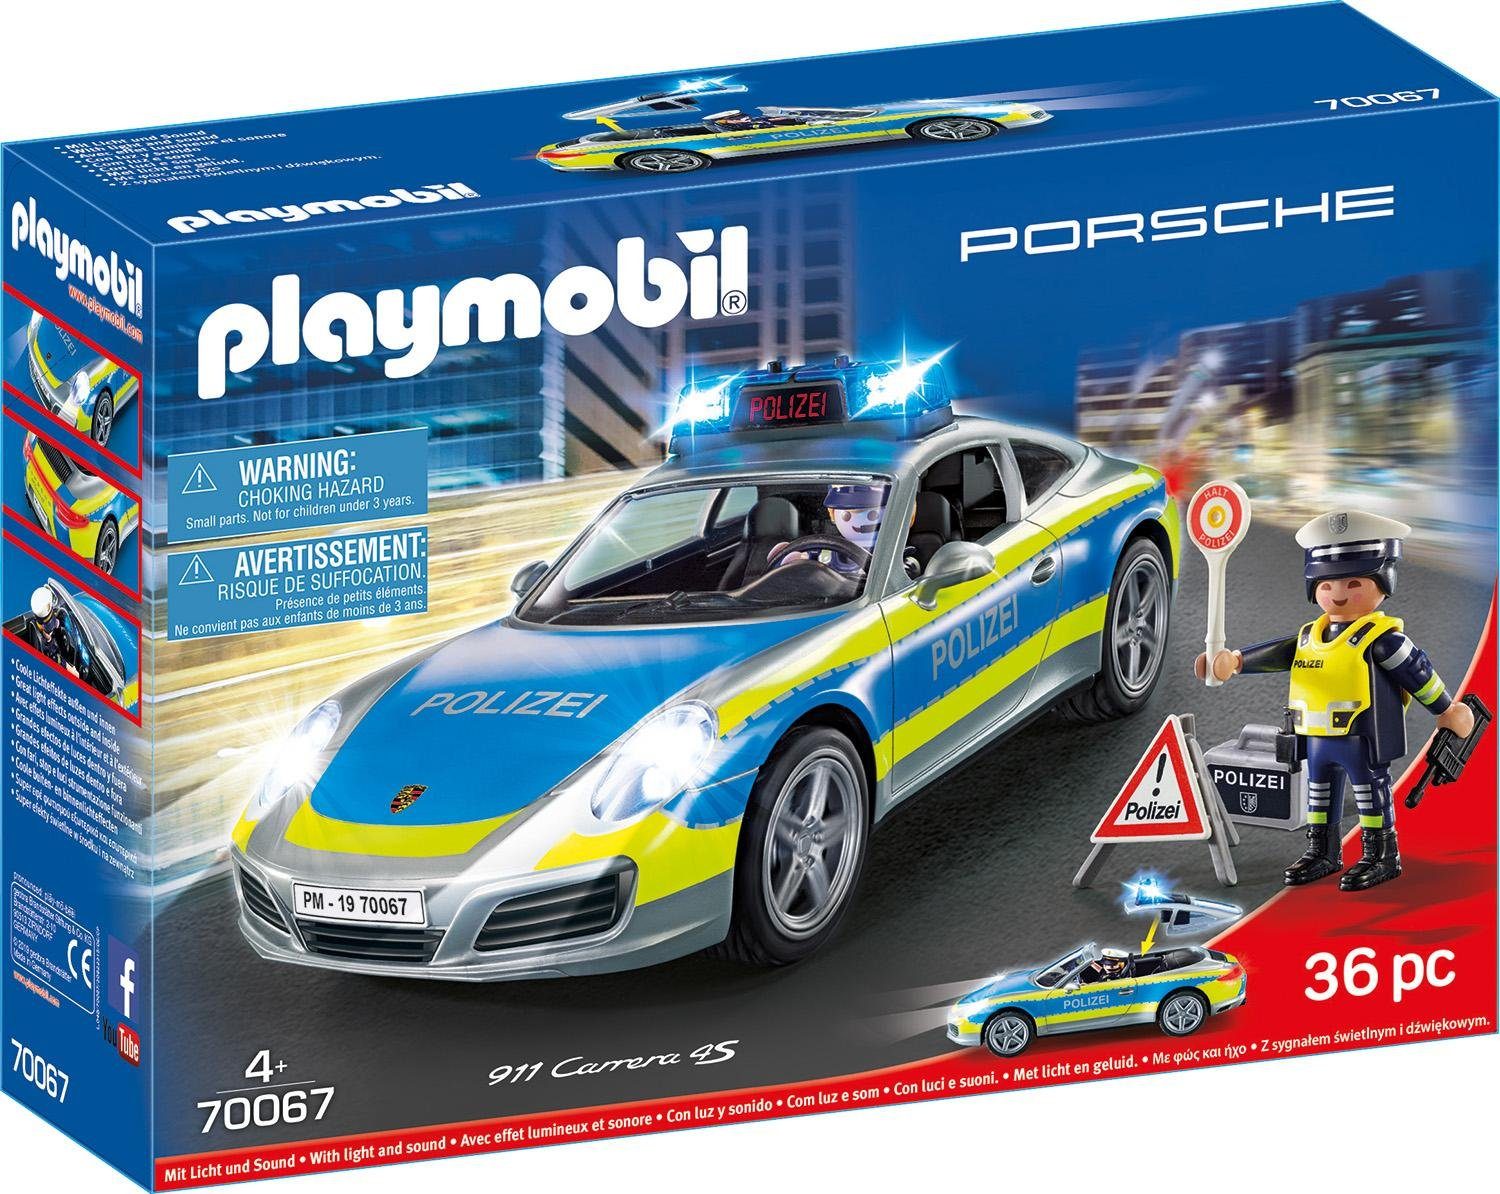 Polizei Carrera Playmobil® (70067), City Porsche Action, Made St), Germany in 4S 911 Konstruktions-Spielset (36